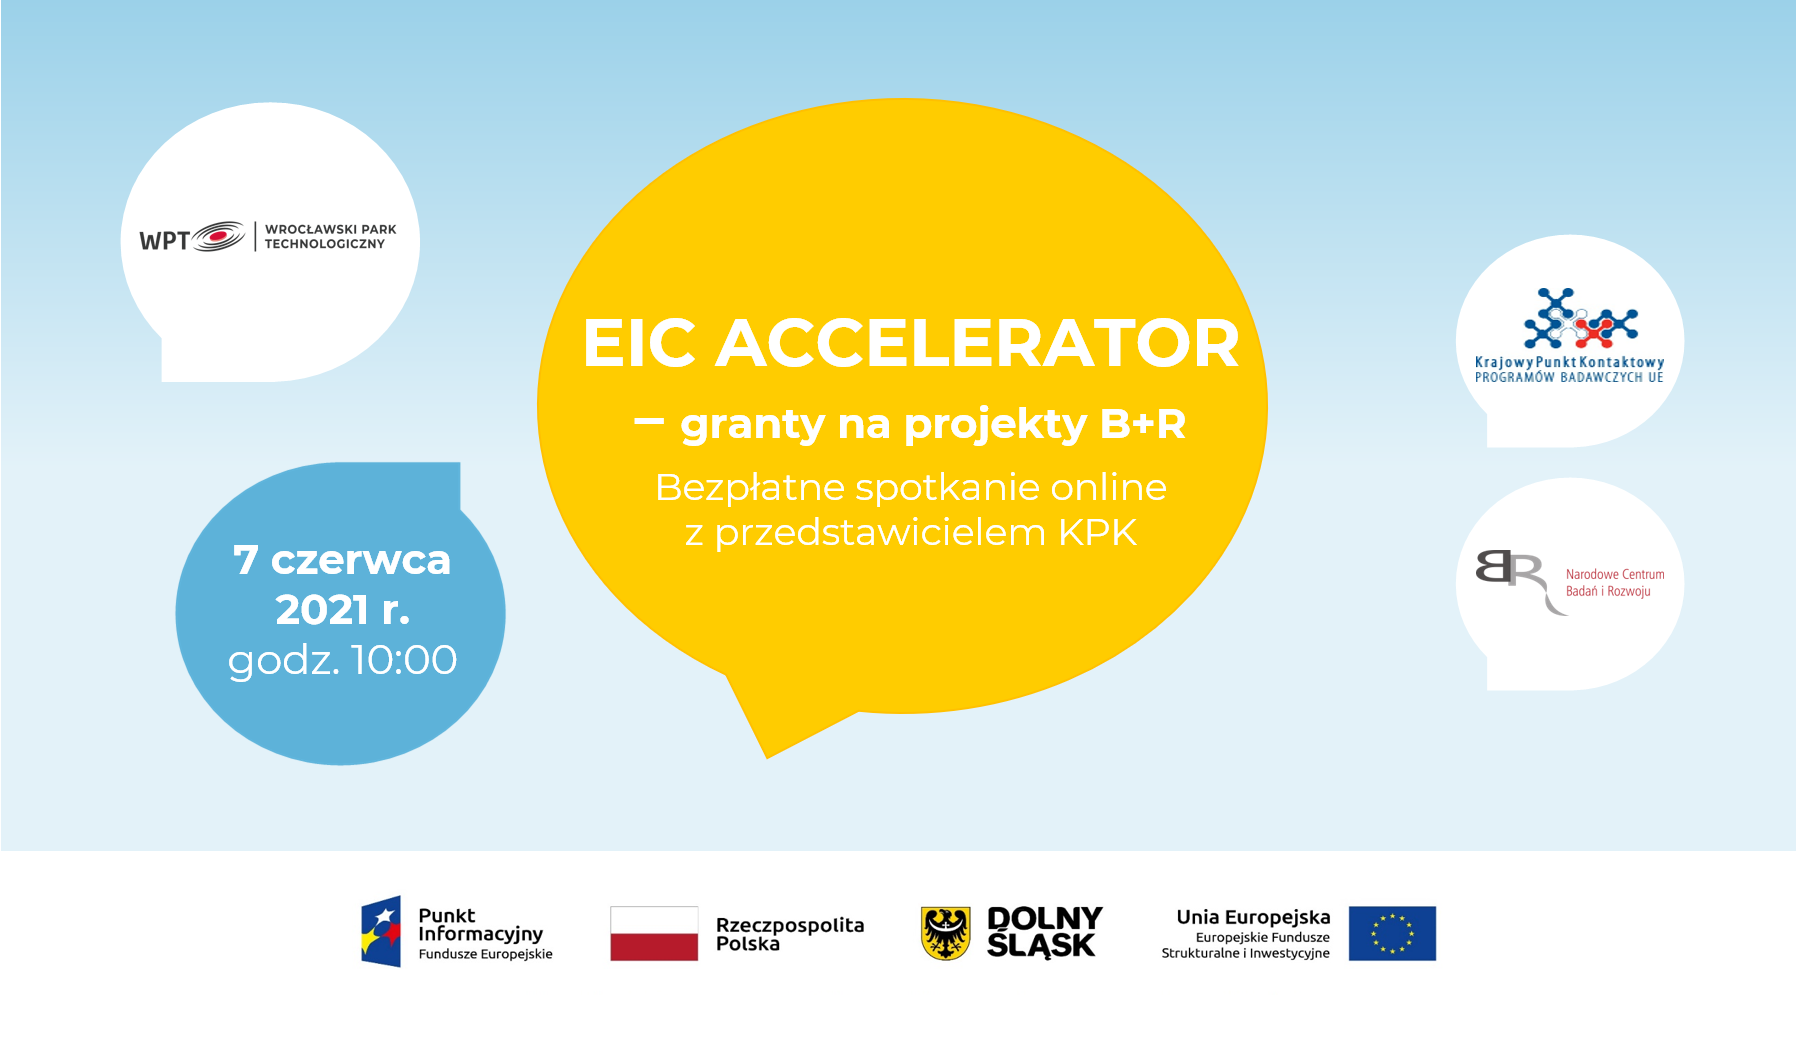 EIC Accelerator: granty na projekty B+R